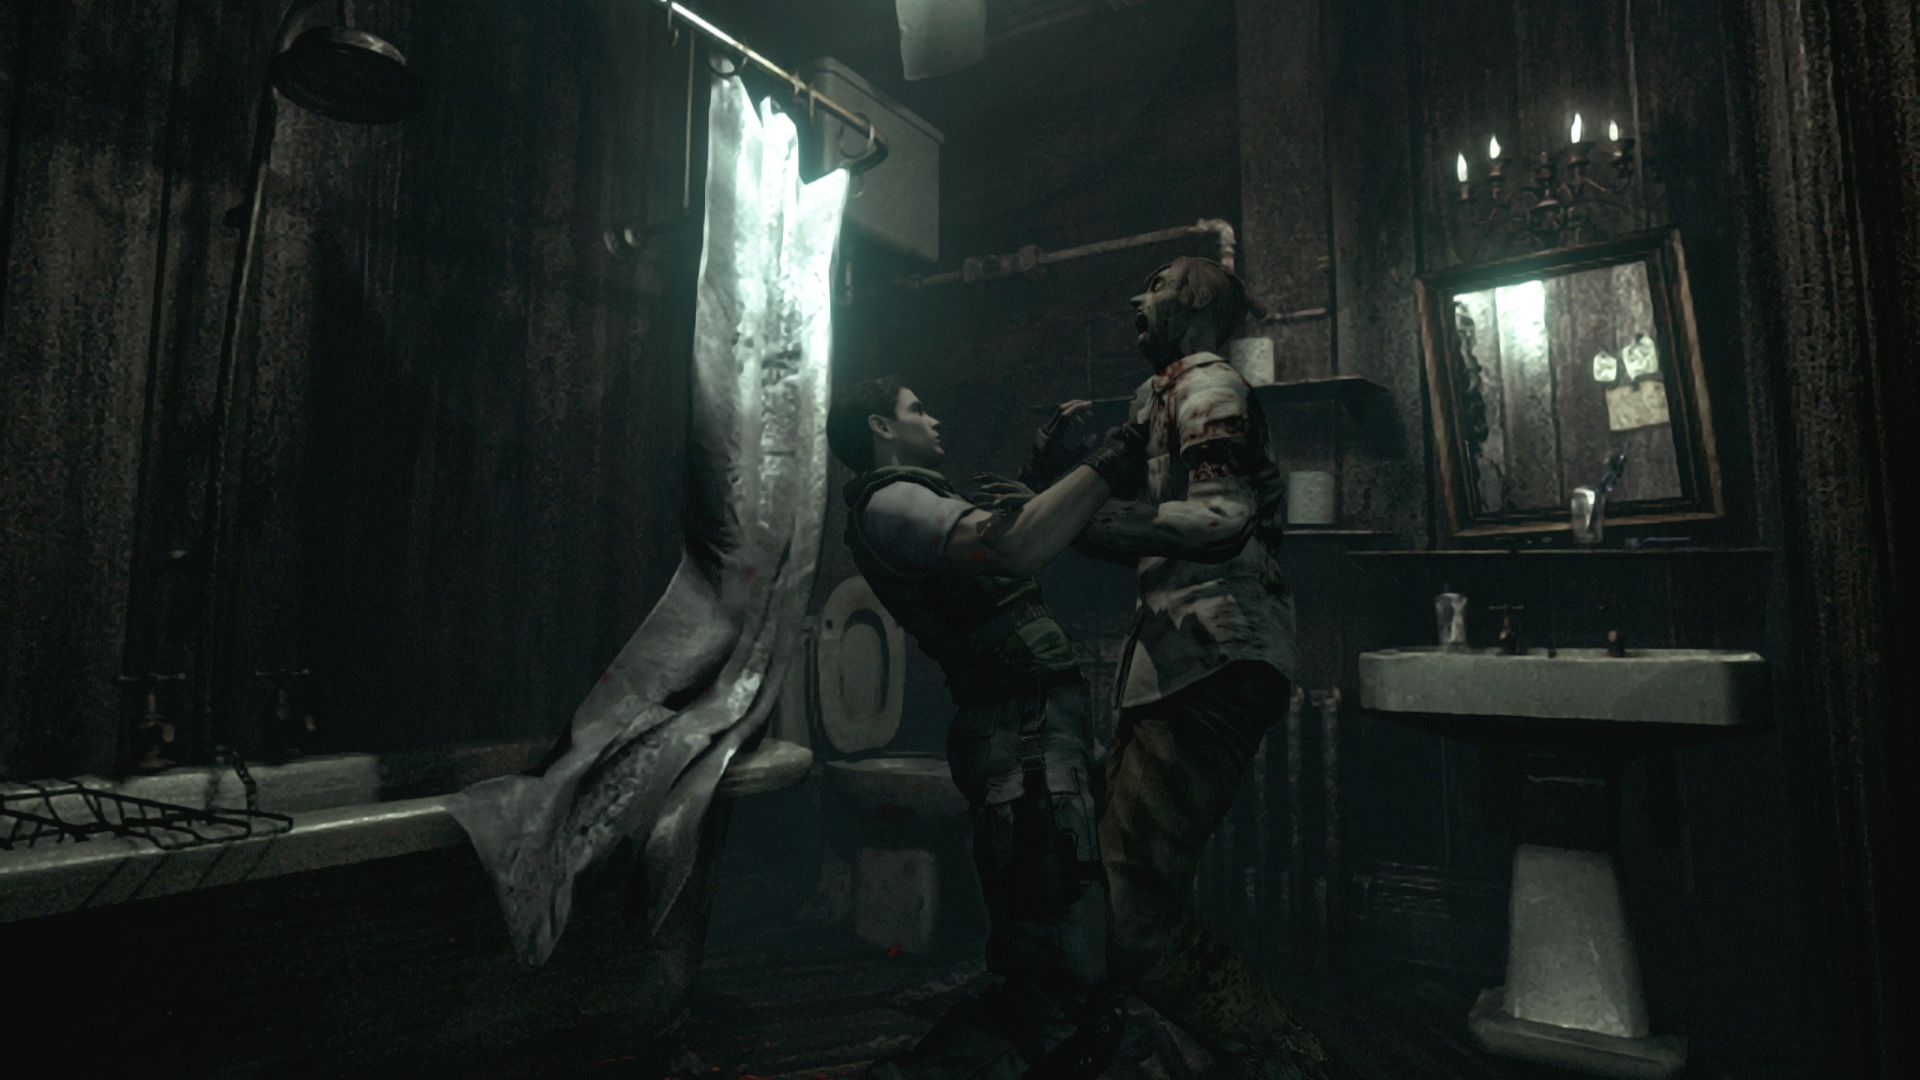 Resident Evil HD Remaster PC vs PS4 Screenshot Comparison: PS4